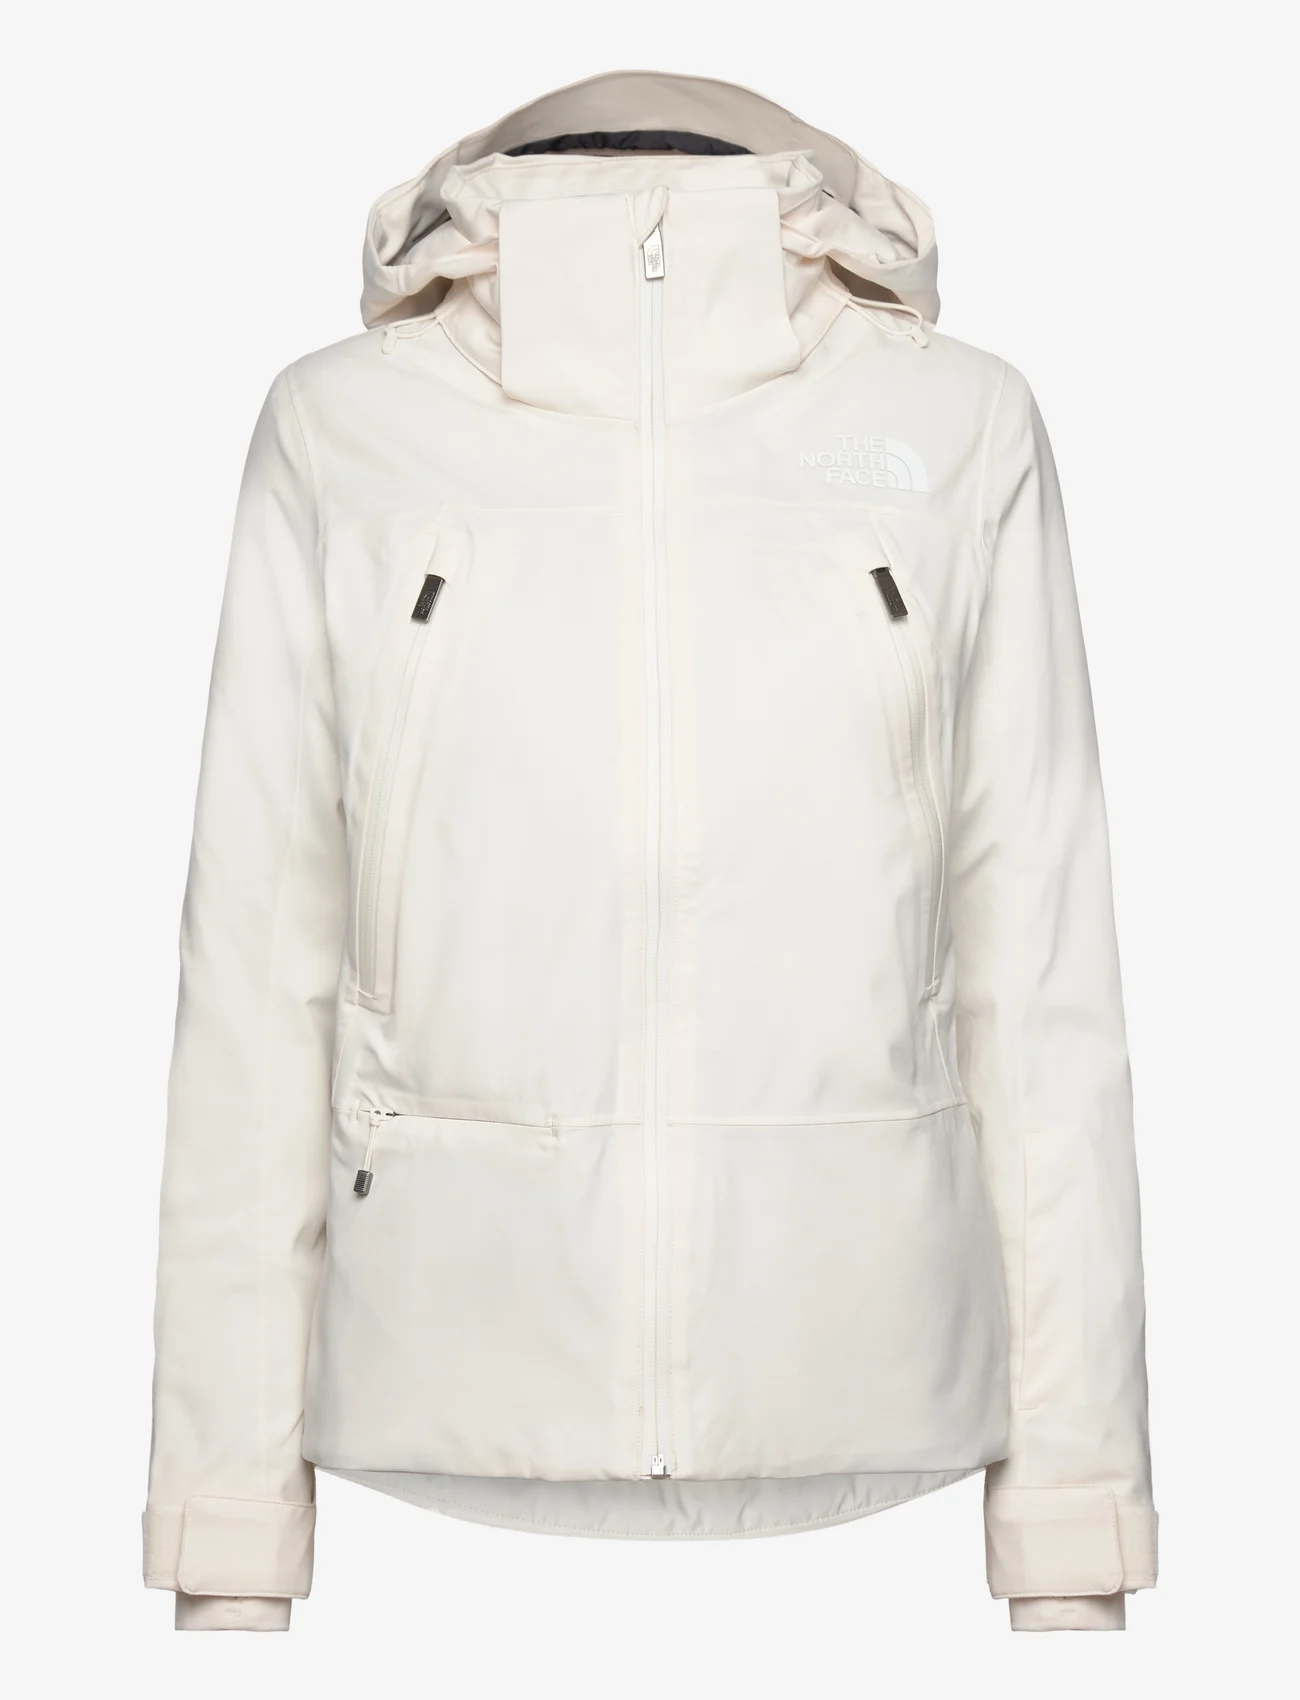 The North Face - W LENADO JACKET - ski jackets - gardenia white - 0